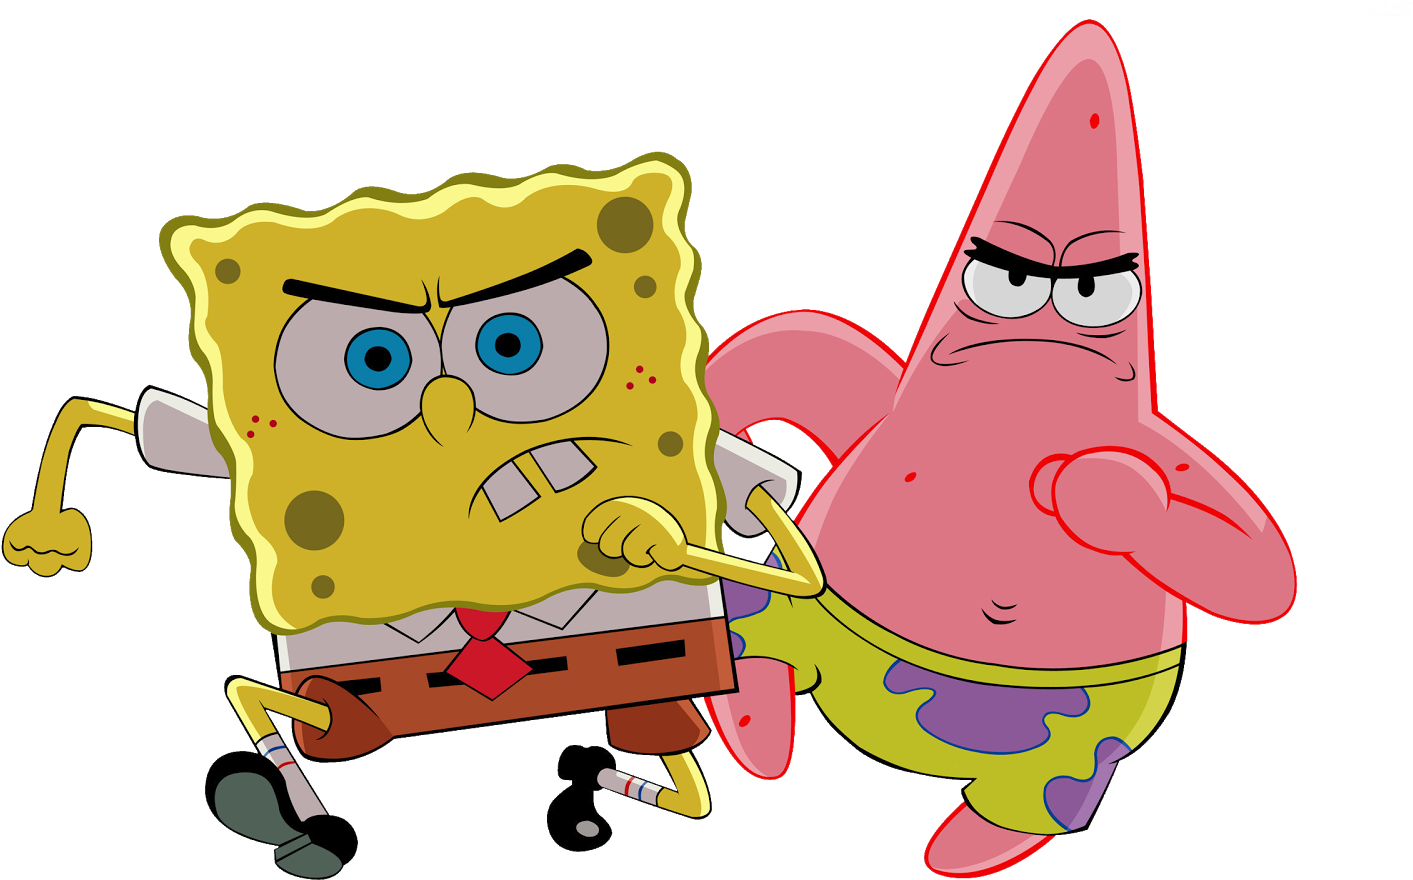 #spongebobsquarepants #nickelodeon #animation #cartoons - Spongebob Squarepants (1600x1000)